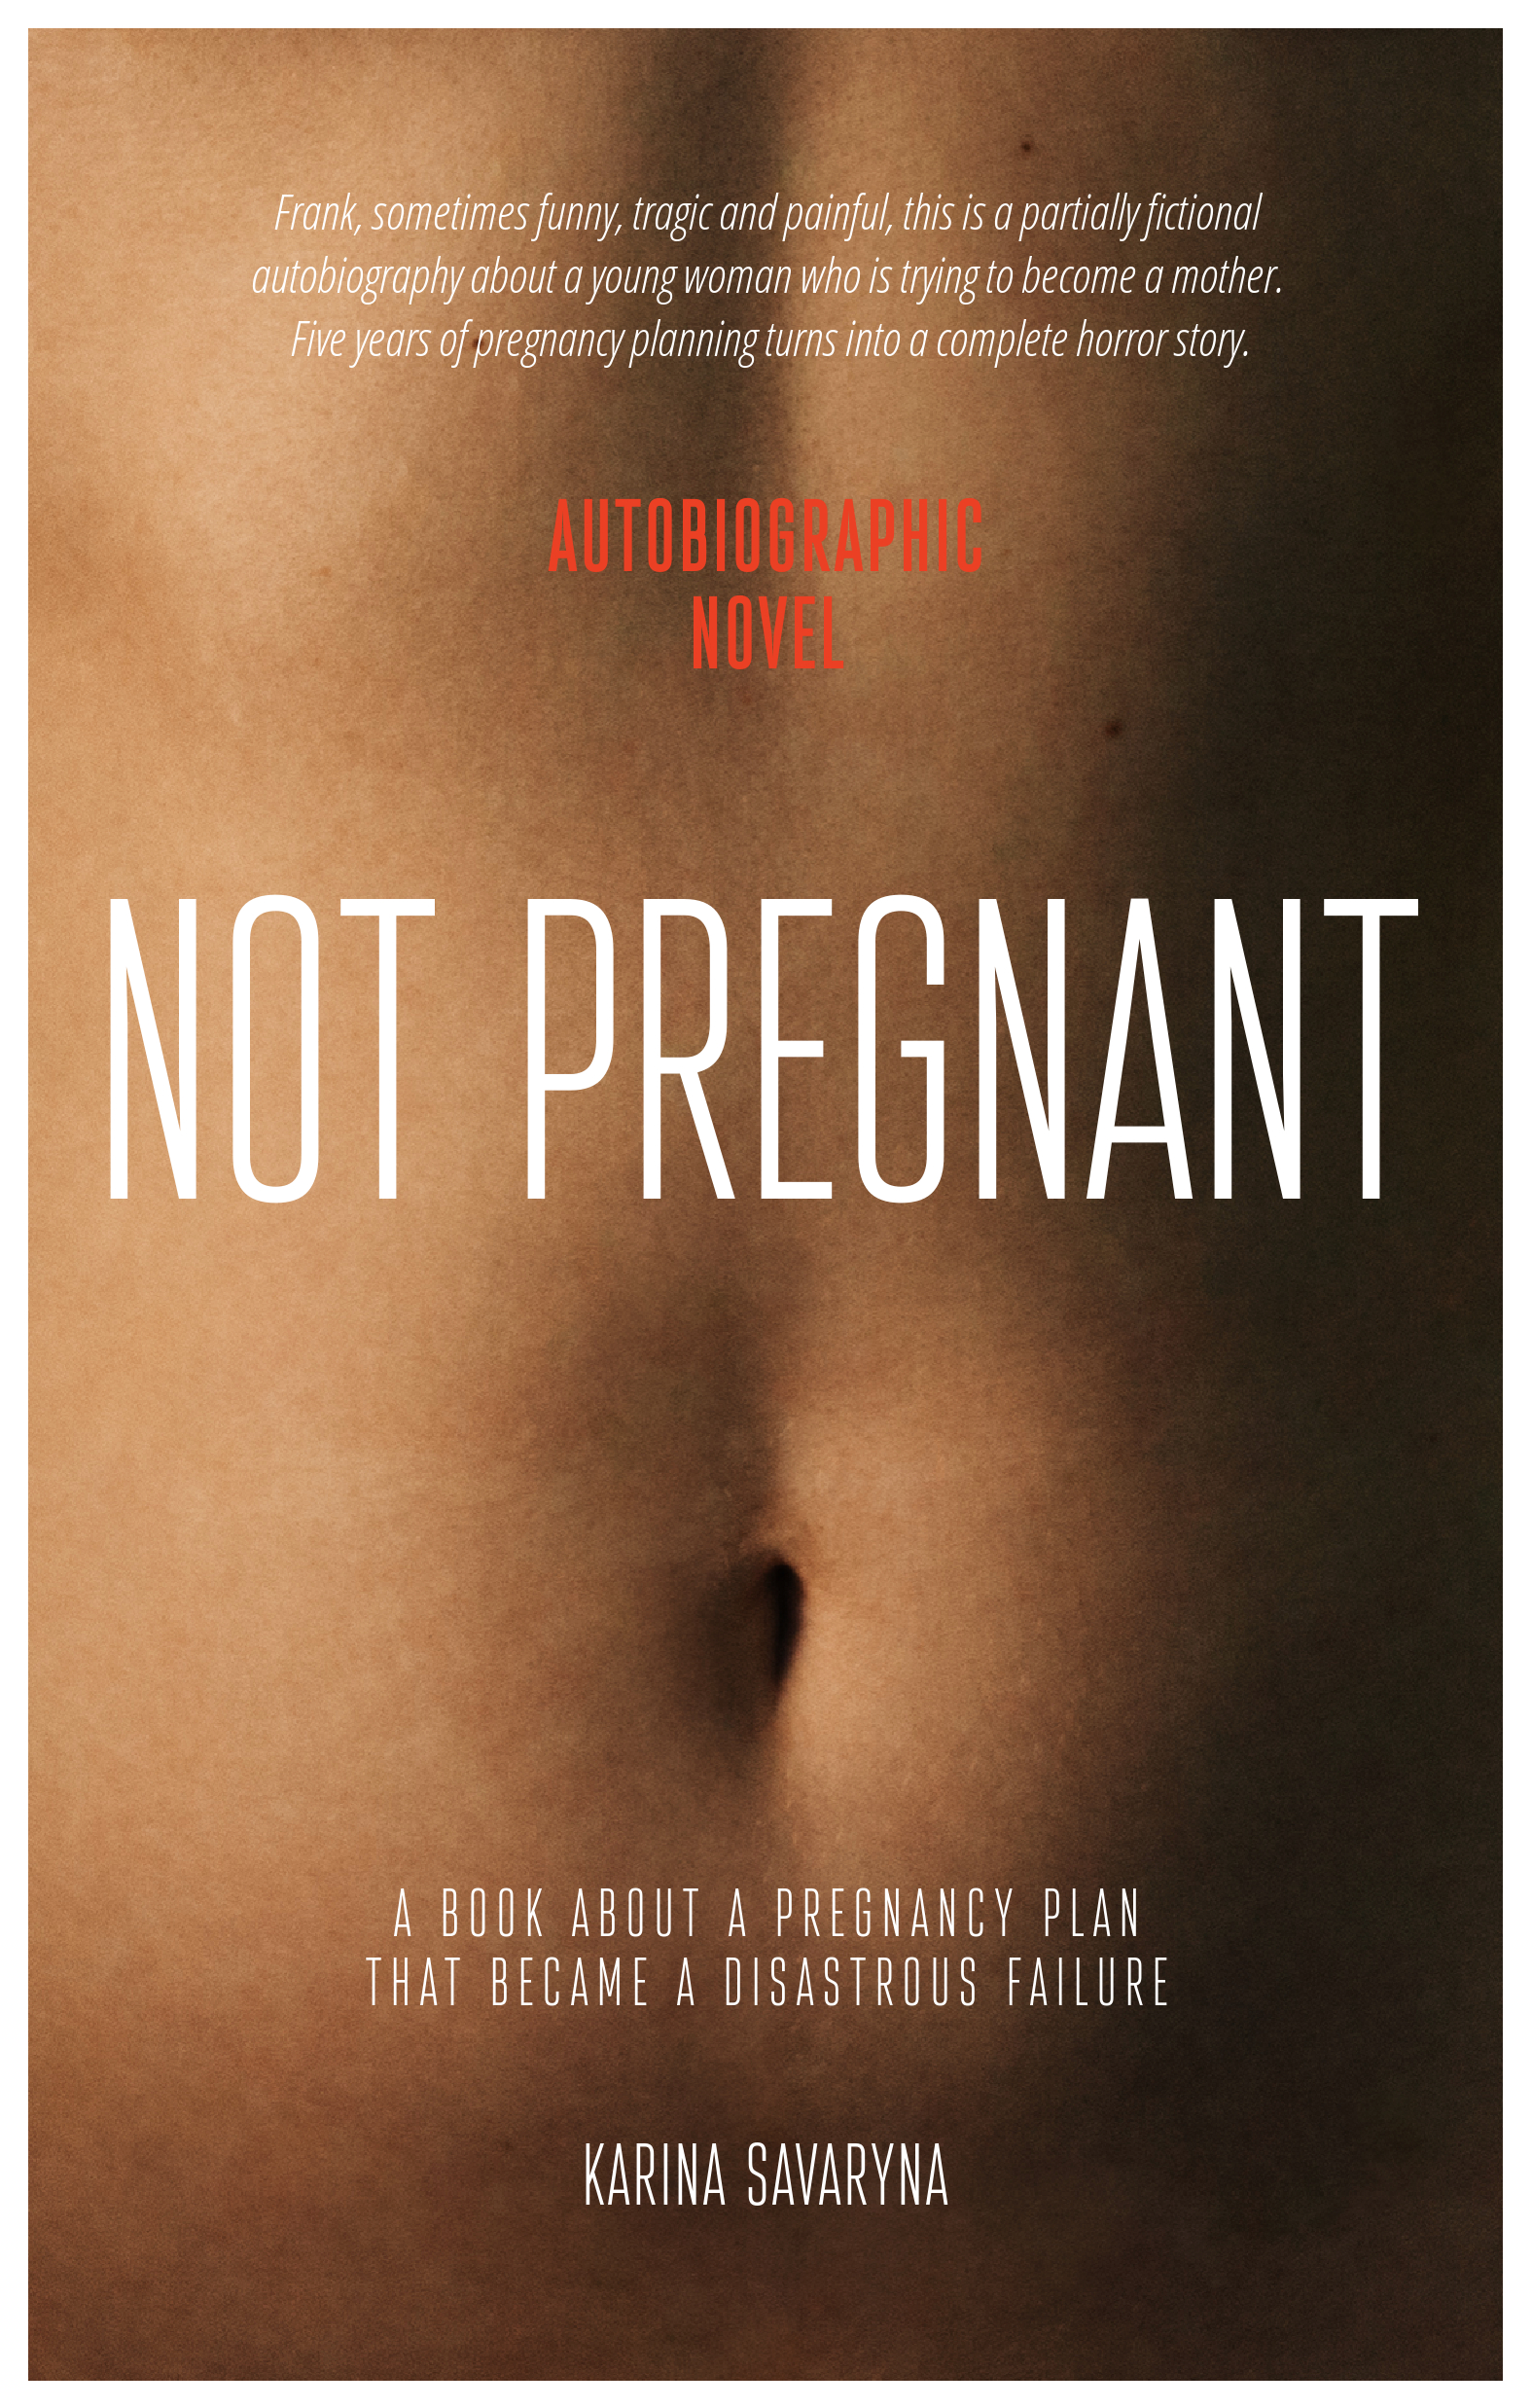 FREE: Not Pregnant by Karina Savaryna